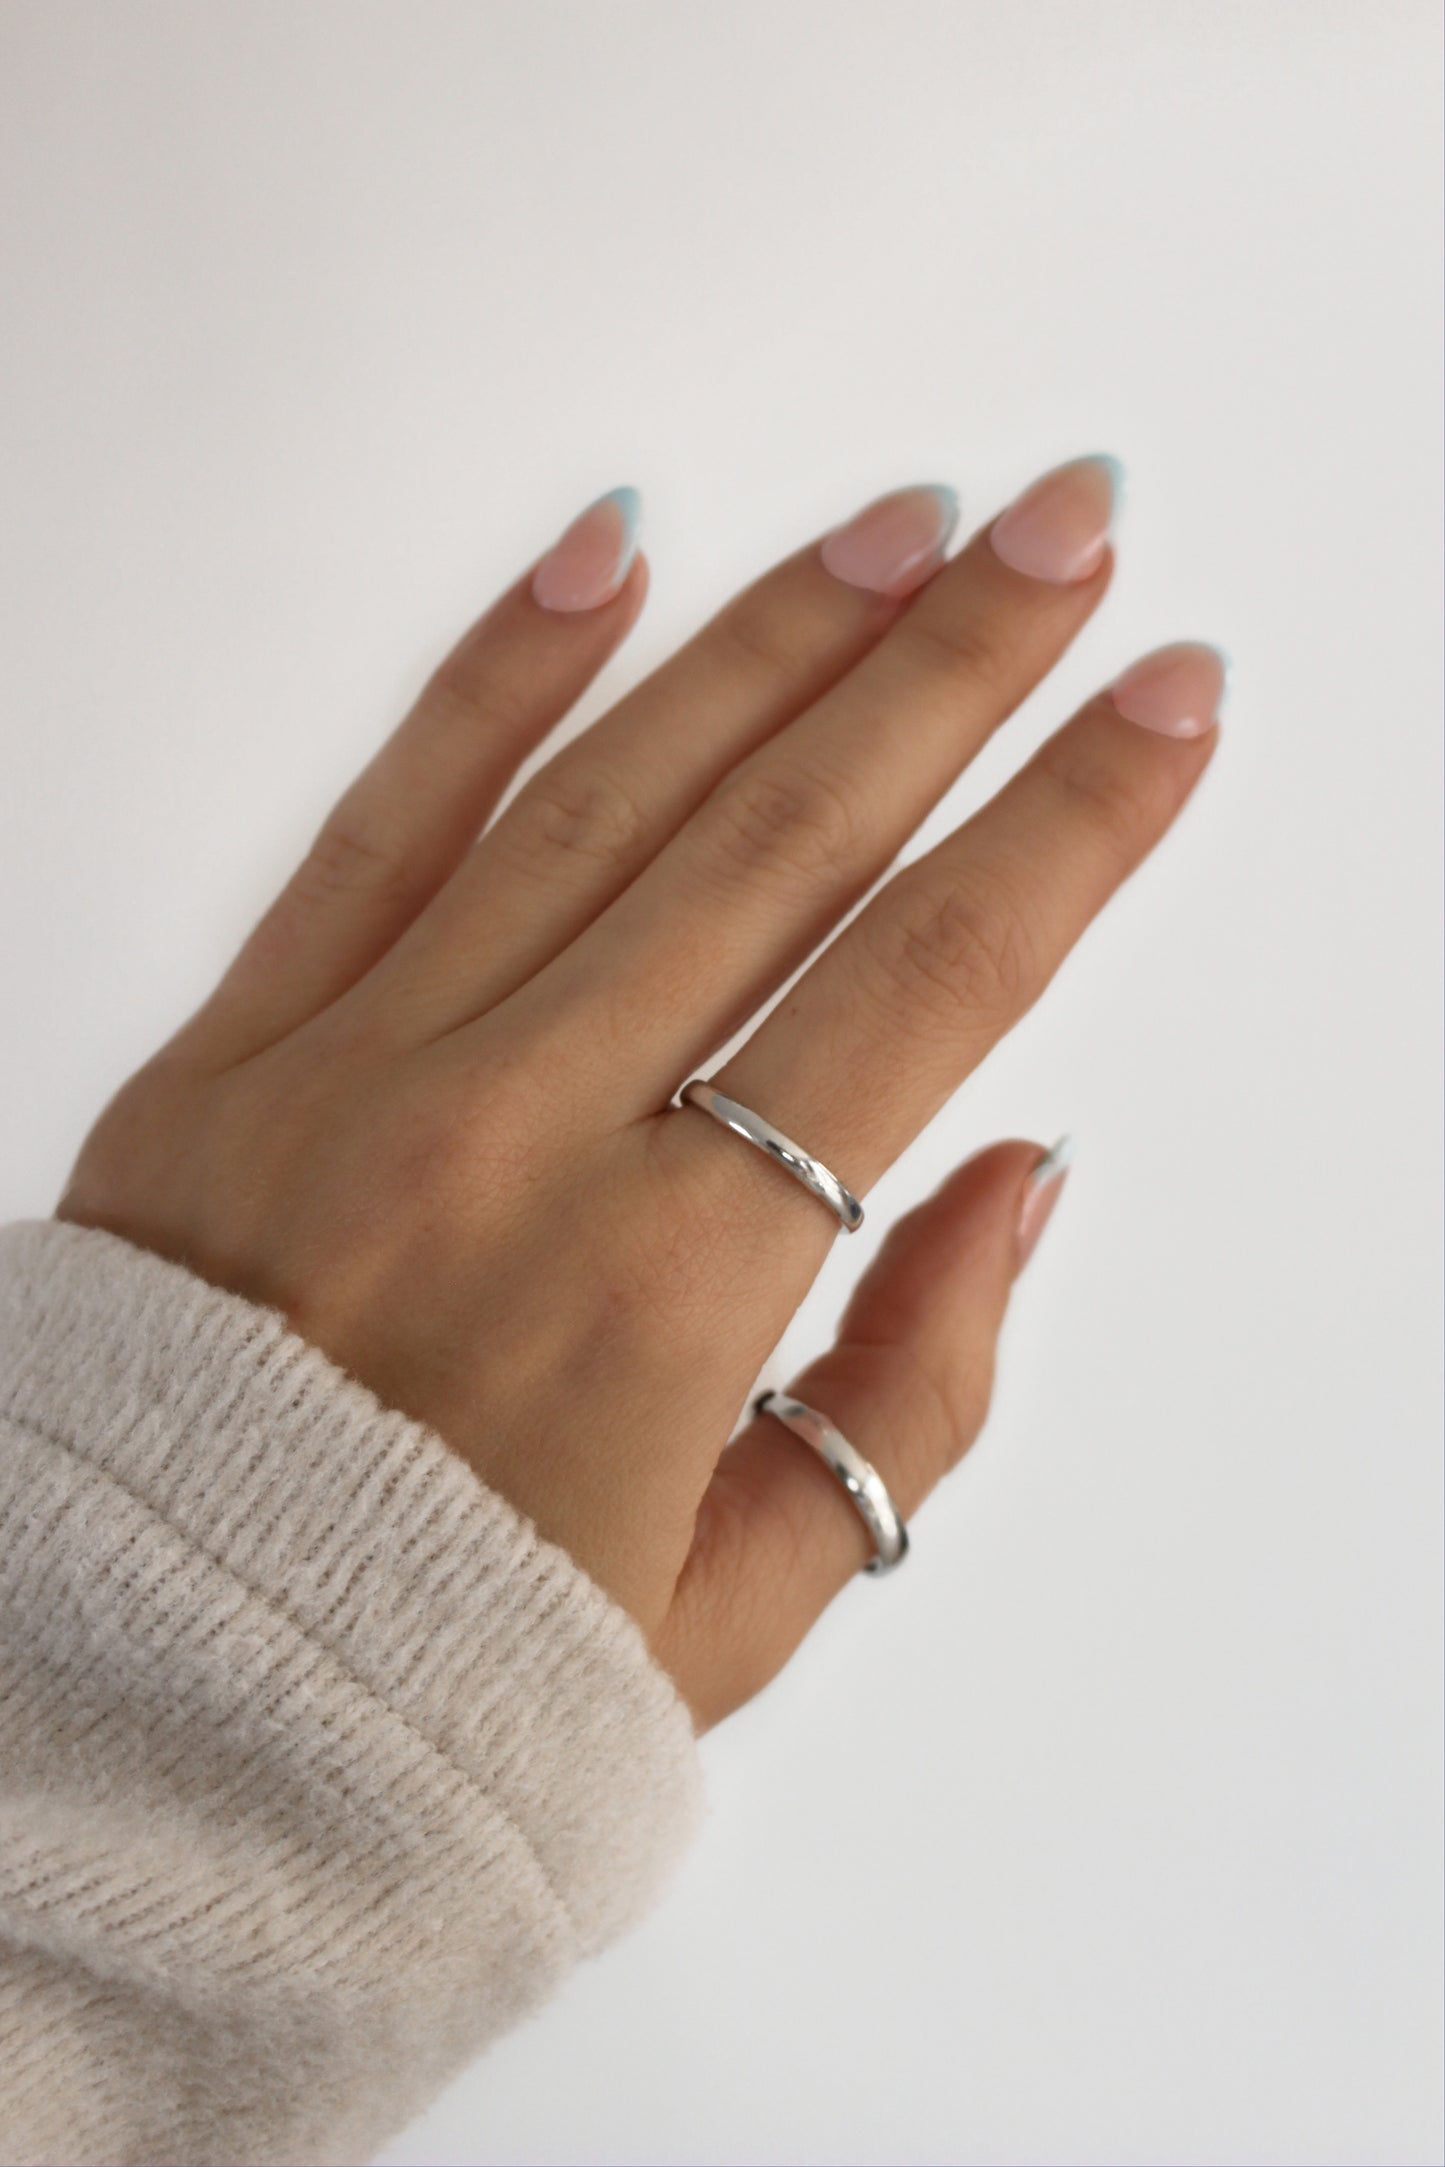 Waterproof ∙ 925 Sterling Silver Couple Rings ∙ Simple Band Ring ∙ Friendship Rings ∙ Men & Woman ∙ Adjustable Set of Band Rings